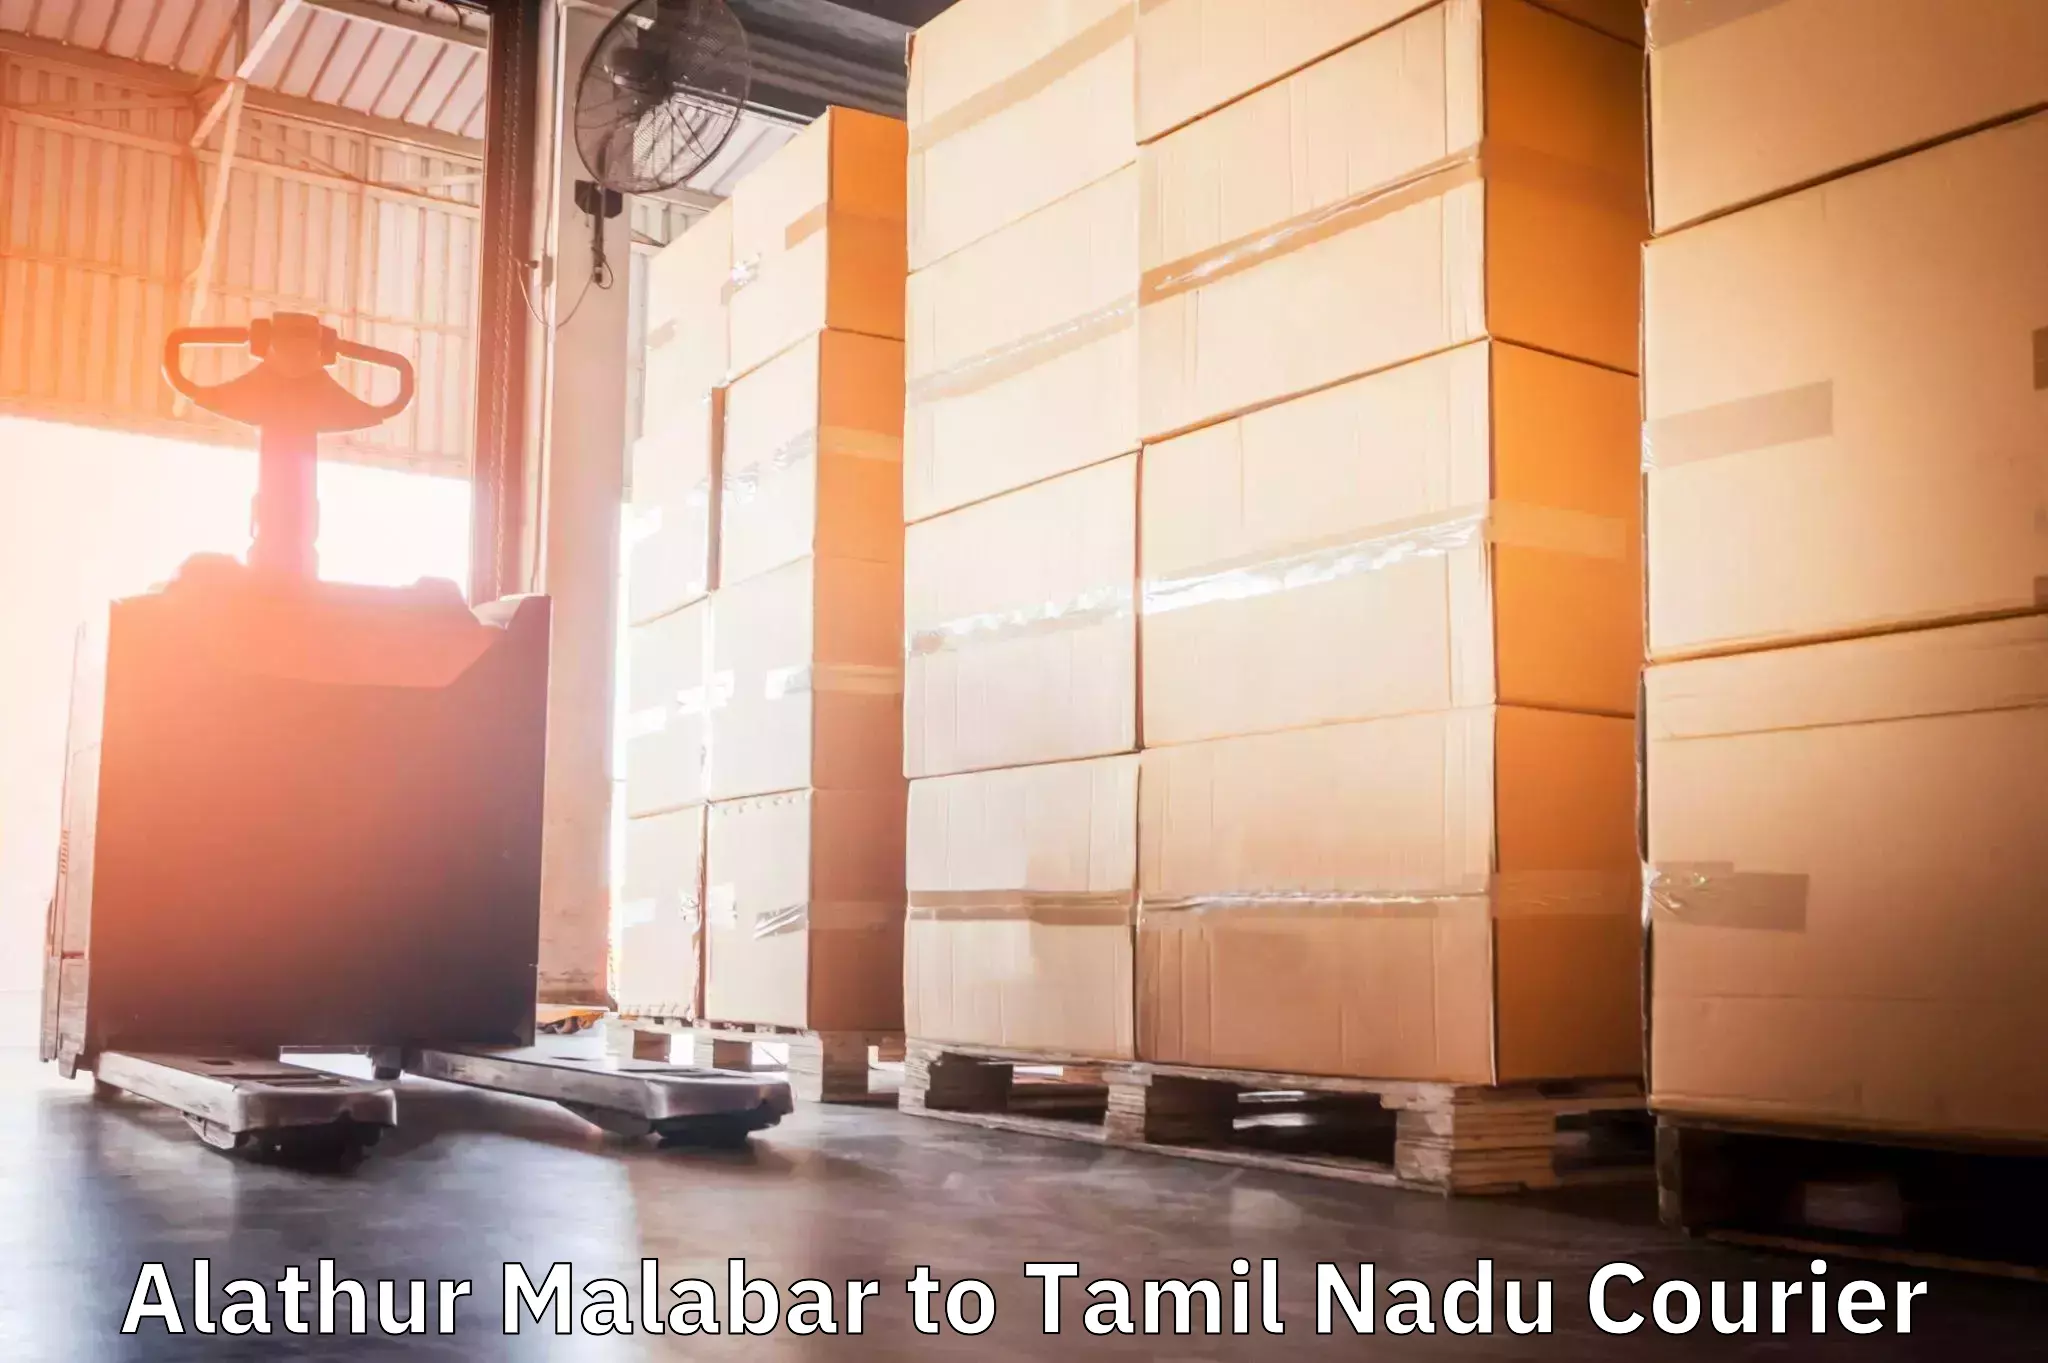 Custom courier packages Alathur Malabar to Bharathiar University Coimbatore